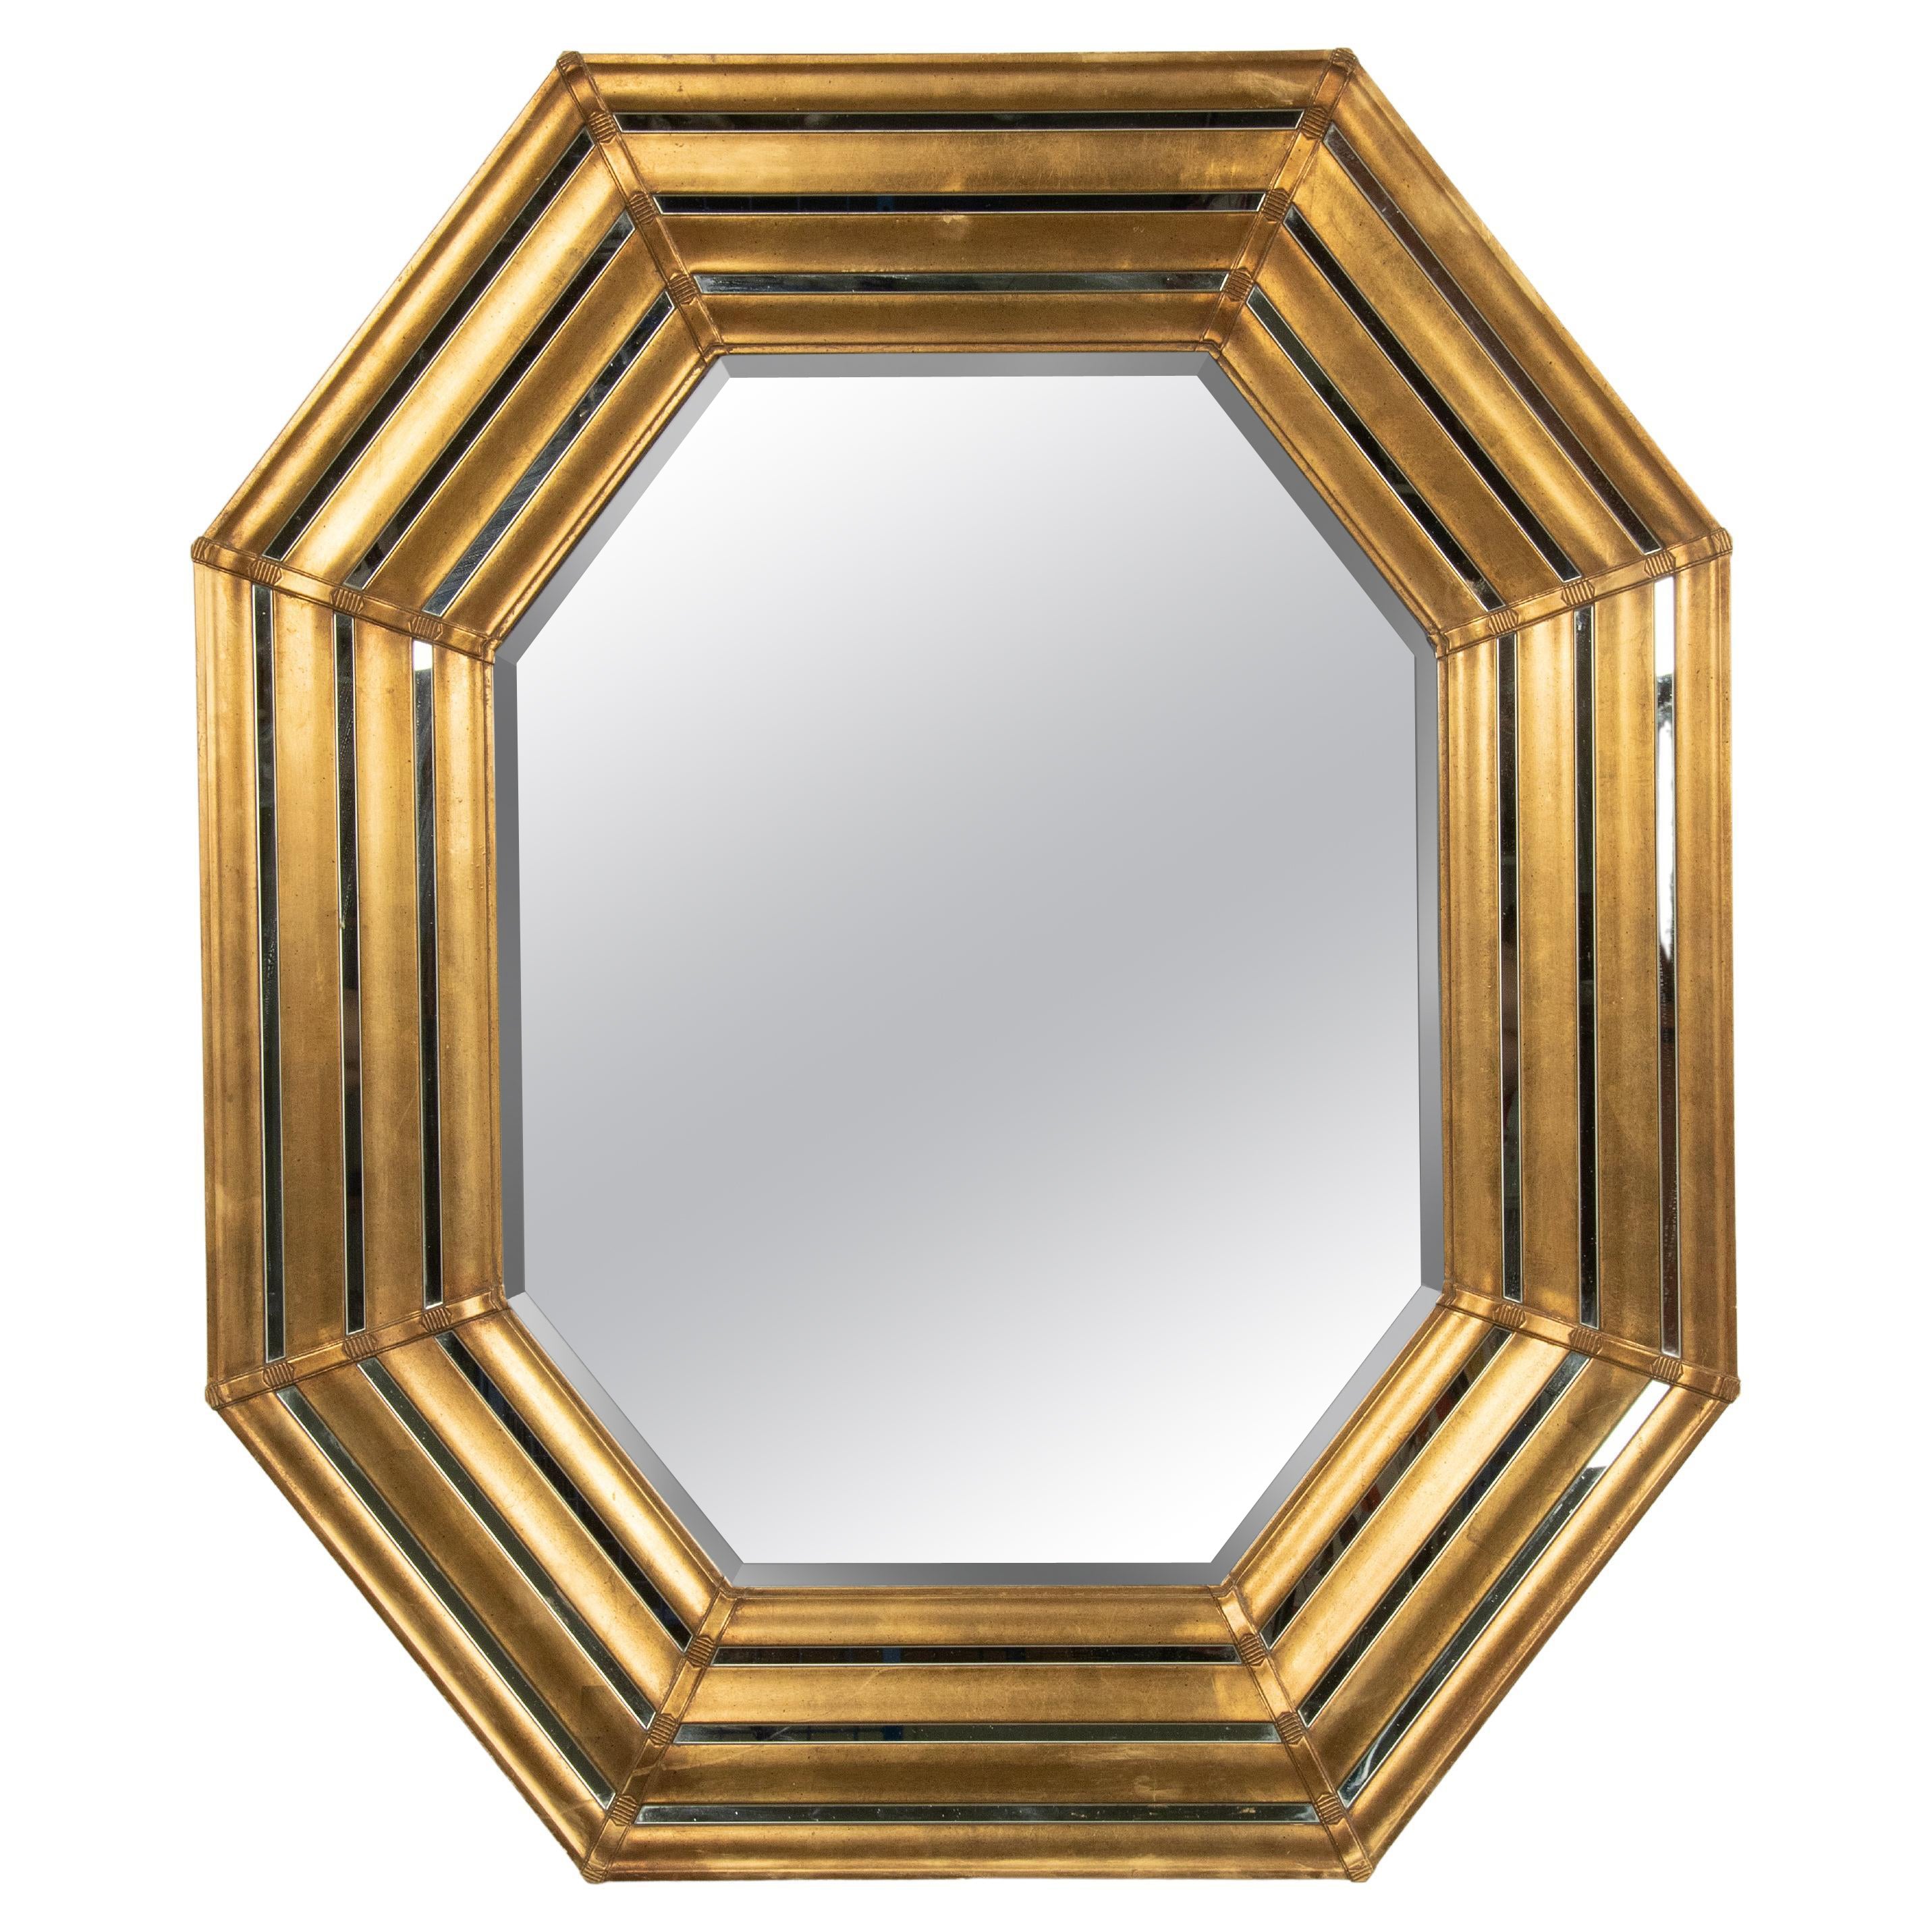 Hollywood Regency Style Octoganonal Gilt Wall Mirror